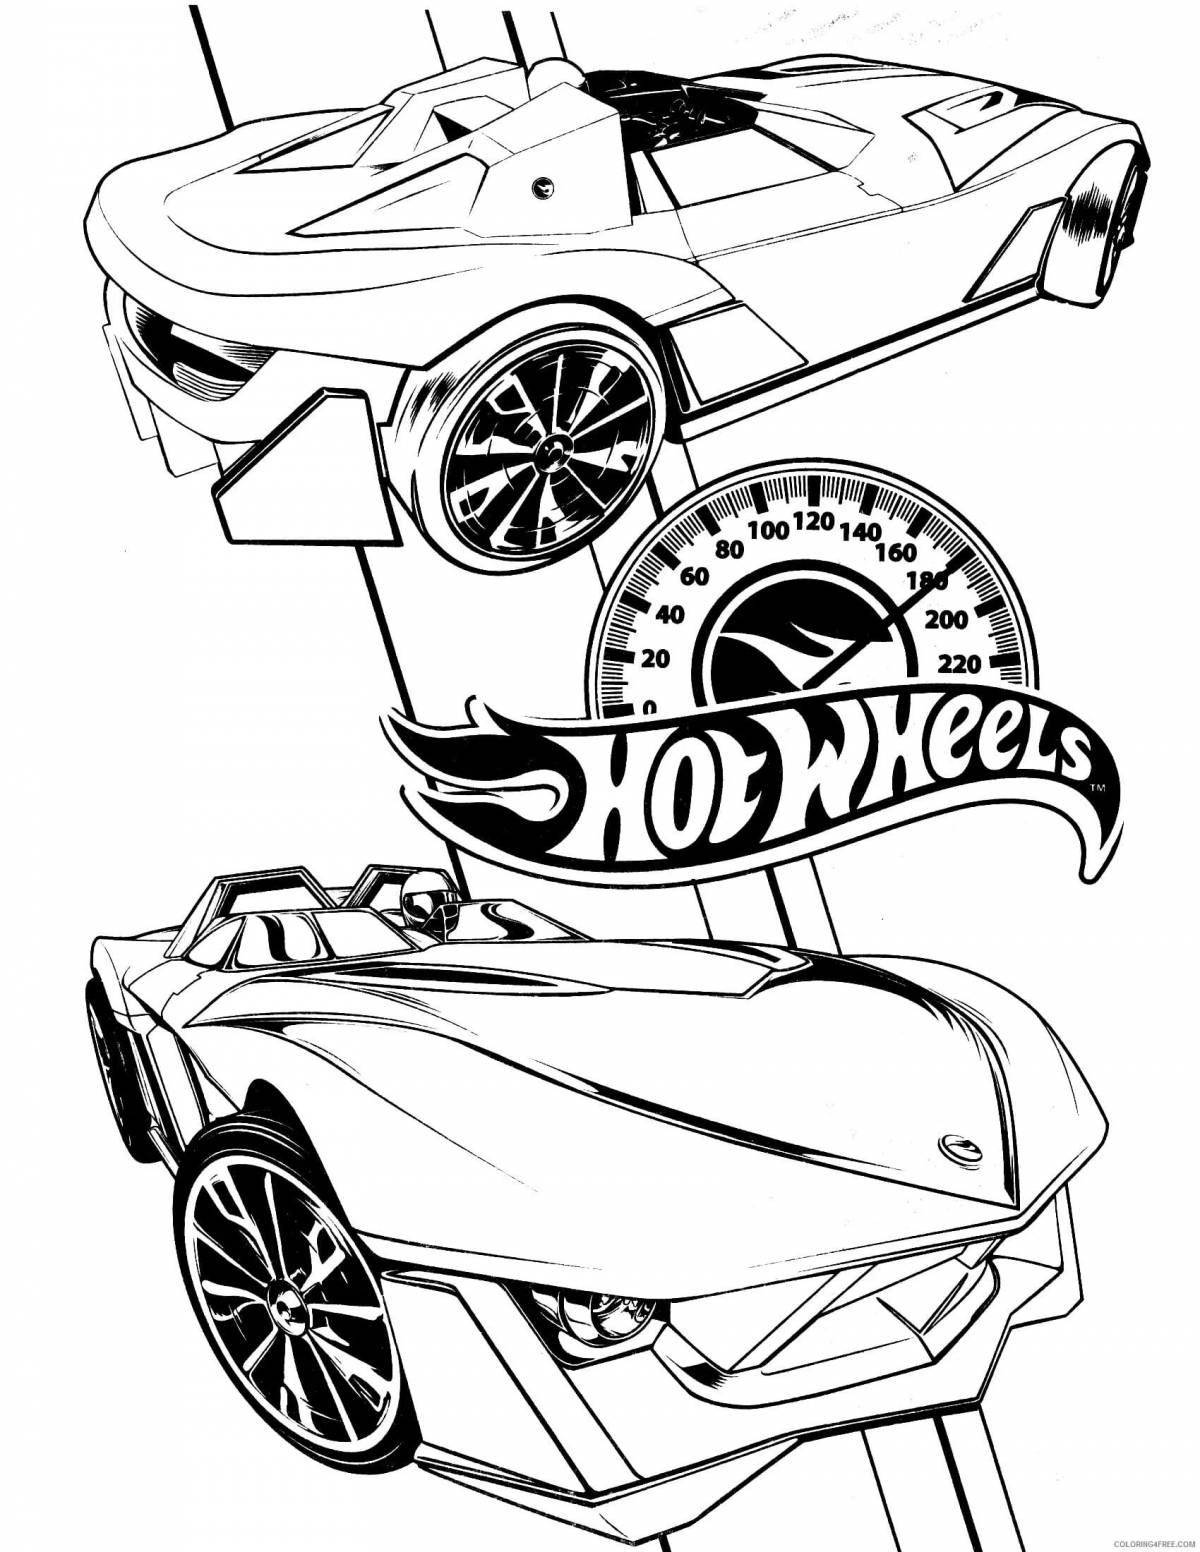 Exotic hot wheels icon